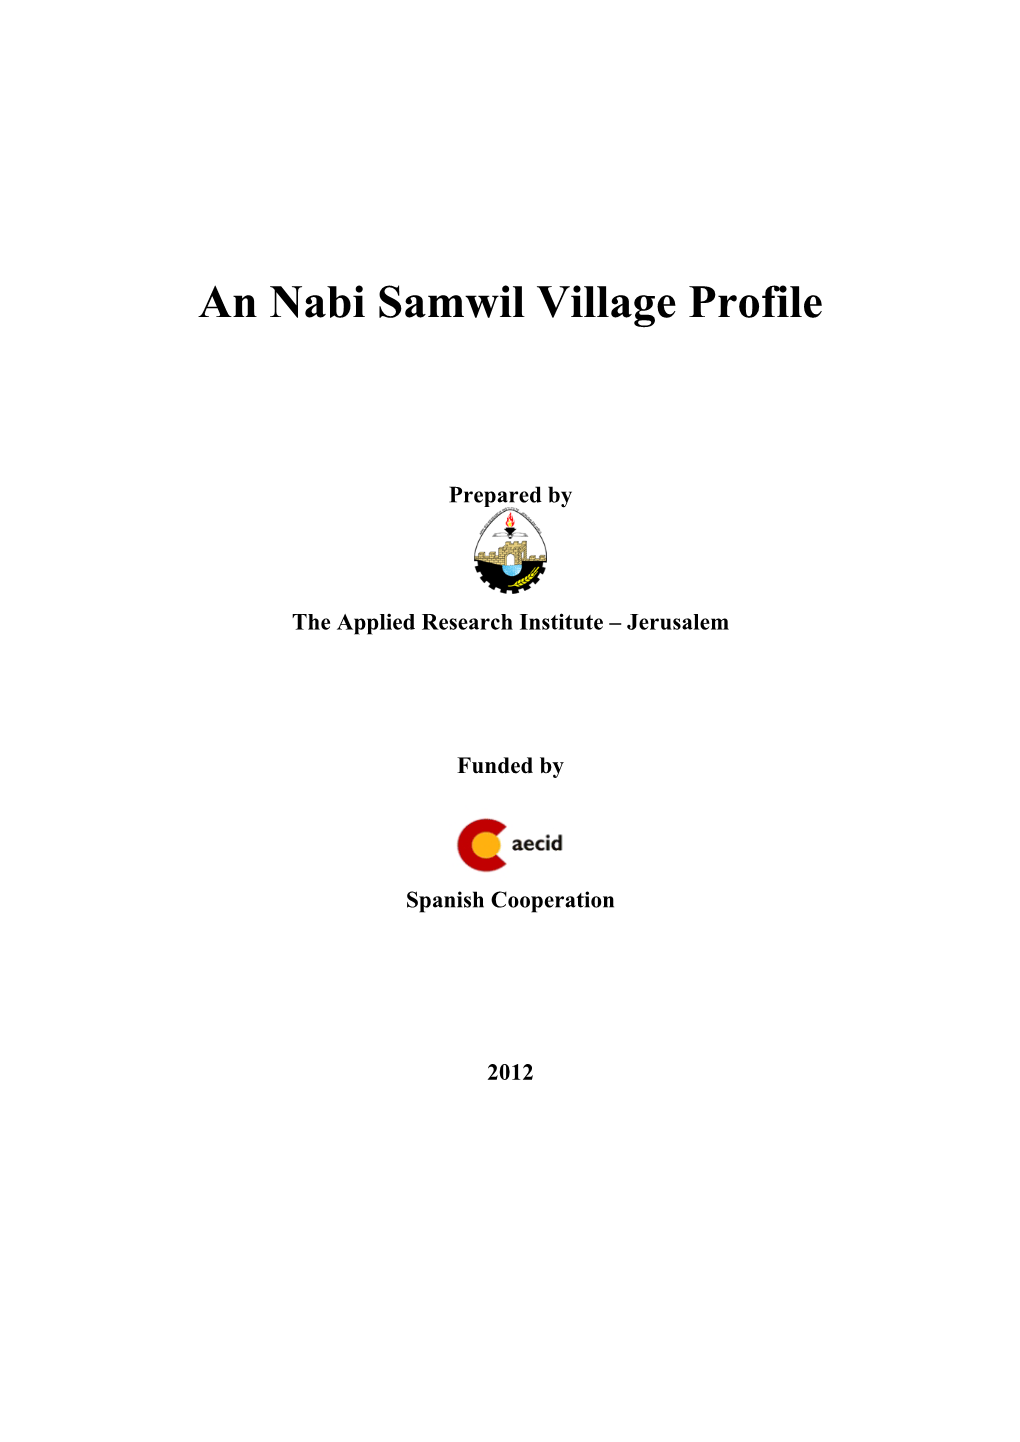 An Nabi Samwil Village Profile